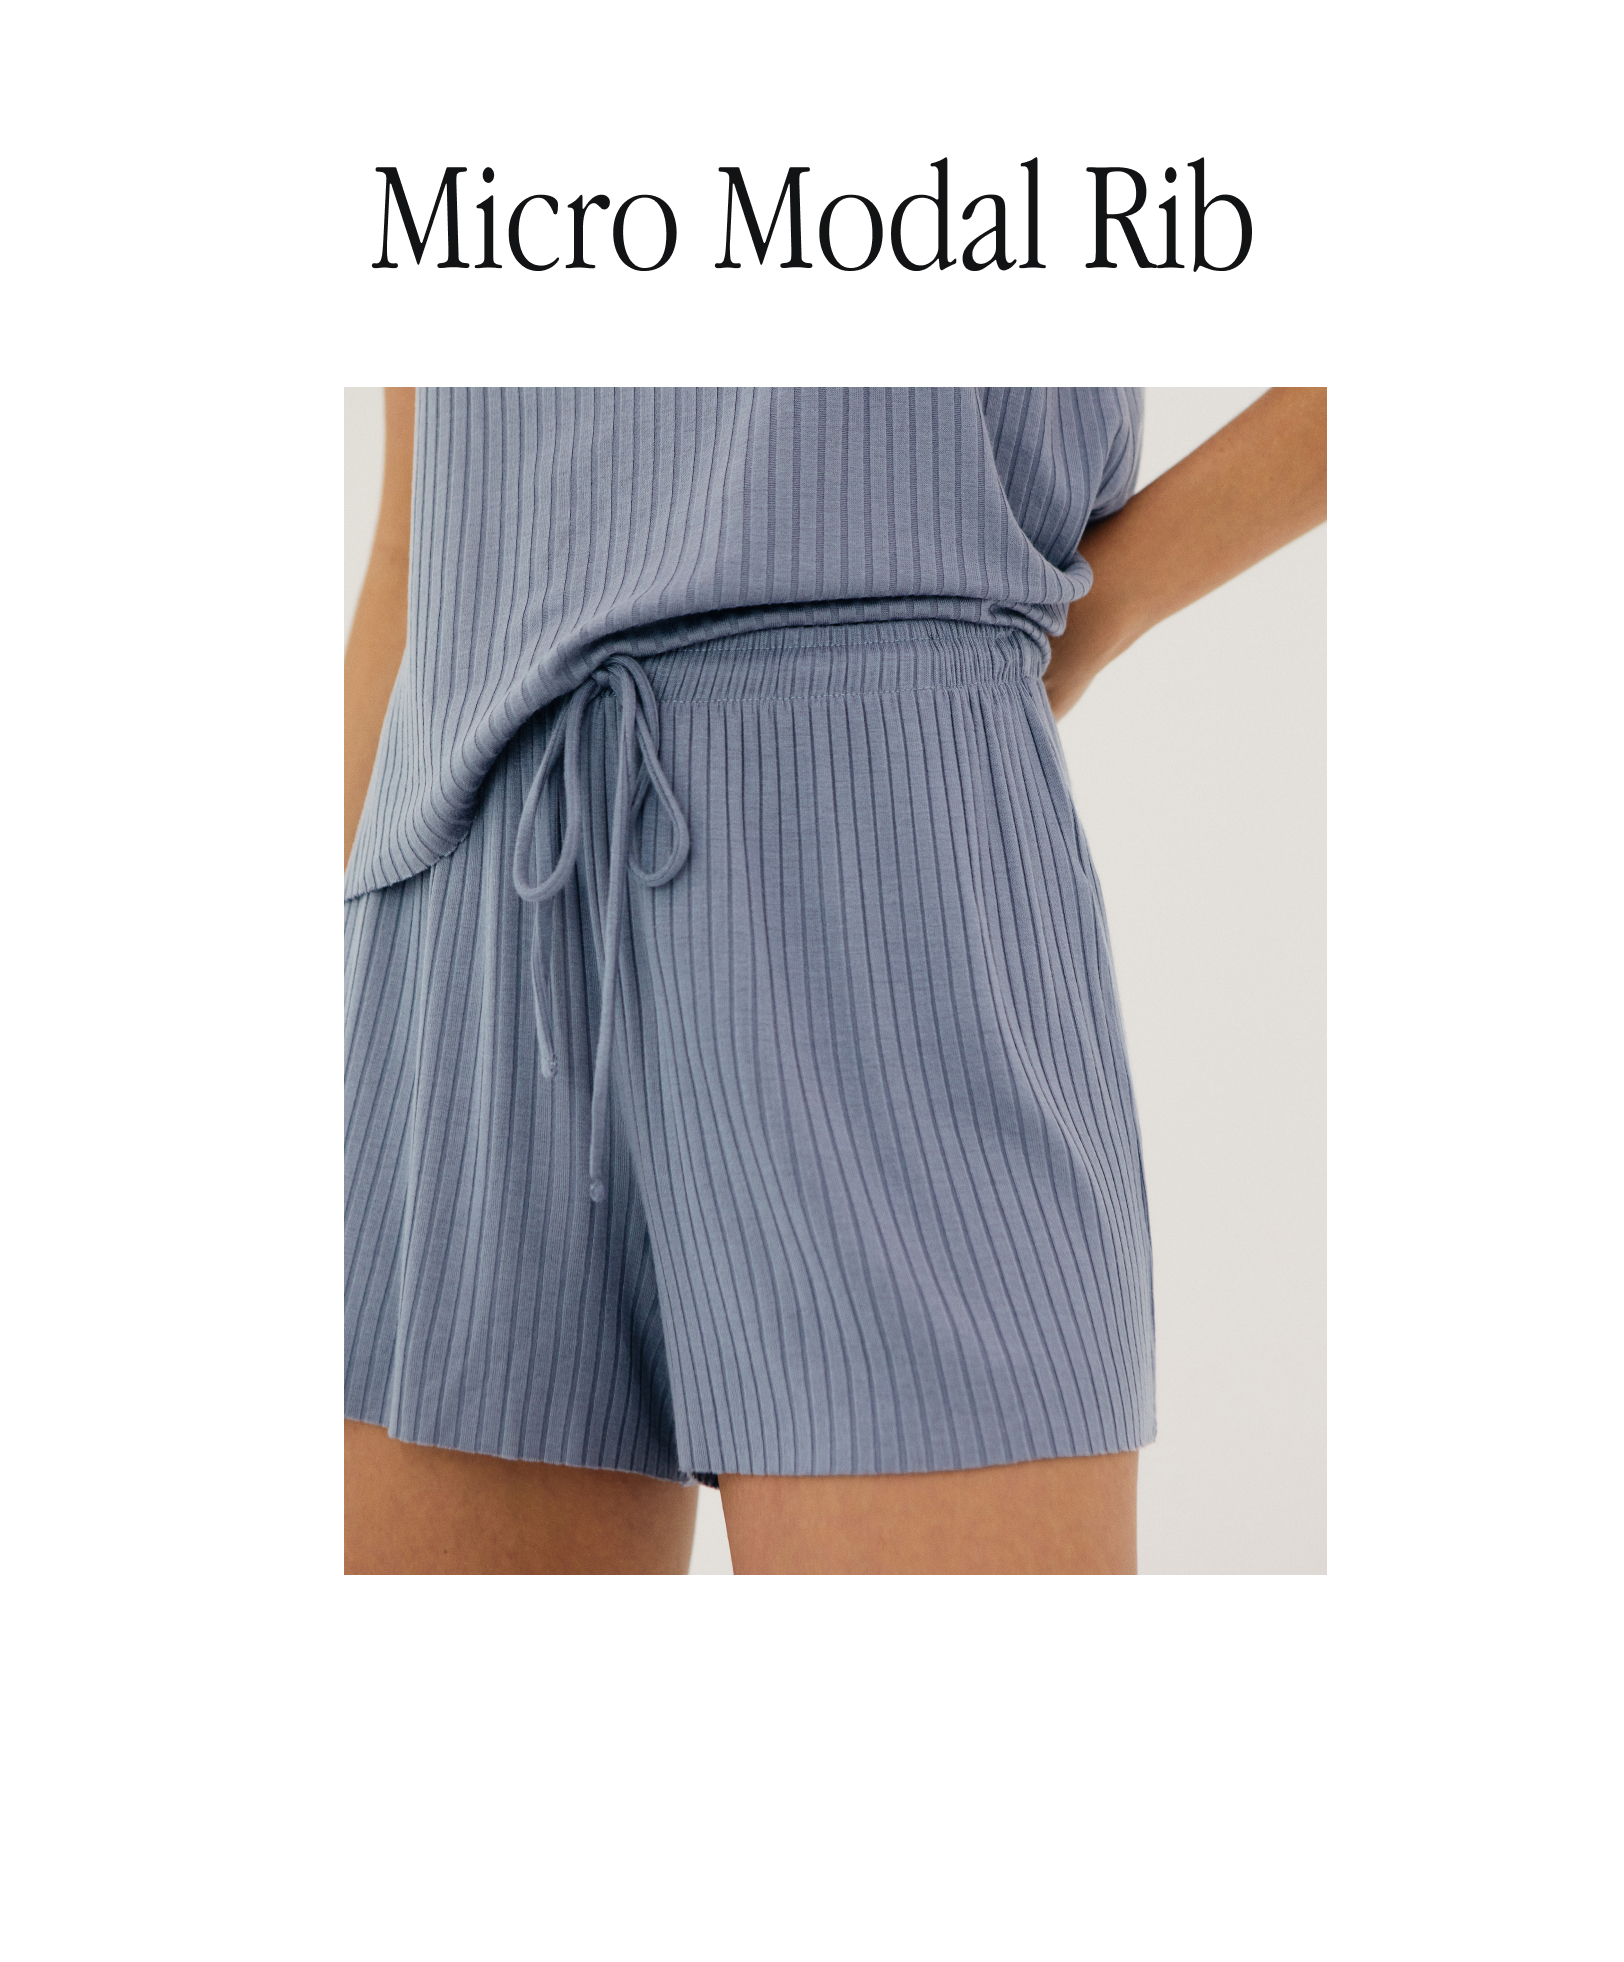 Shorts aus Micromodal mit Rib-Struktur